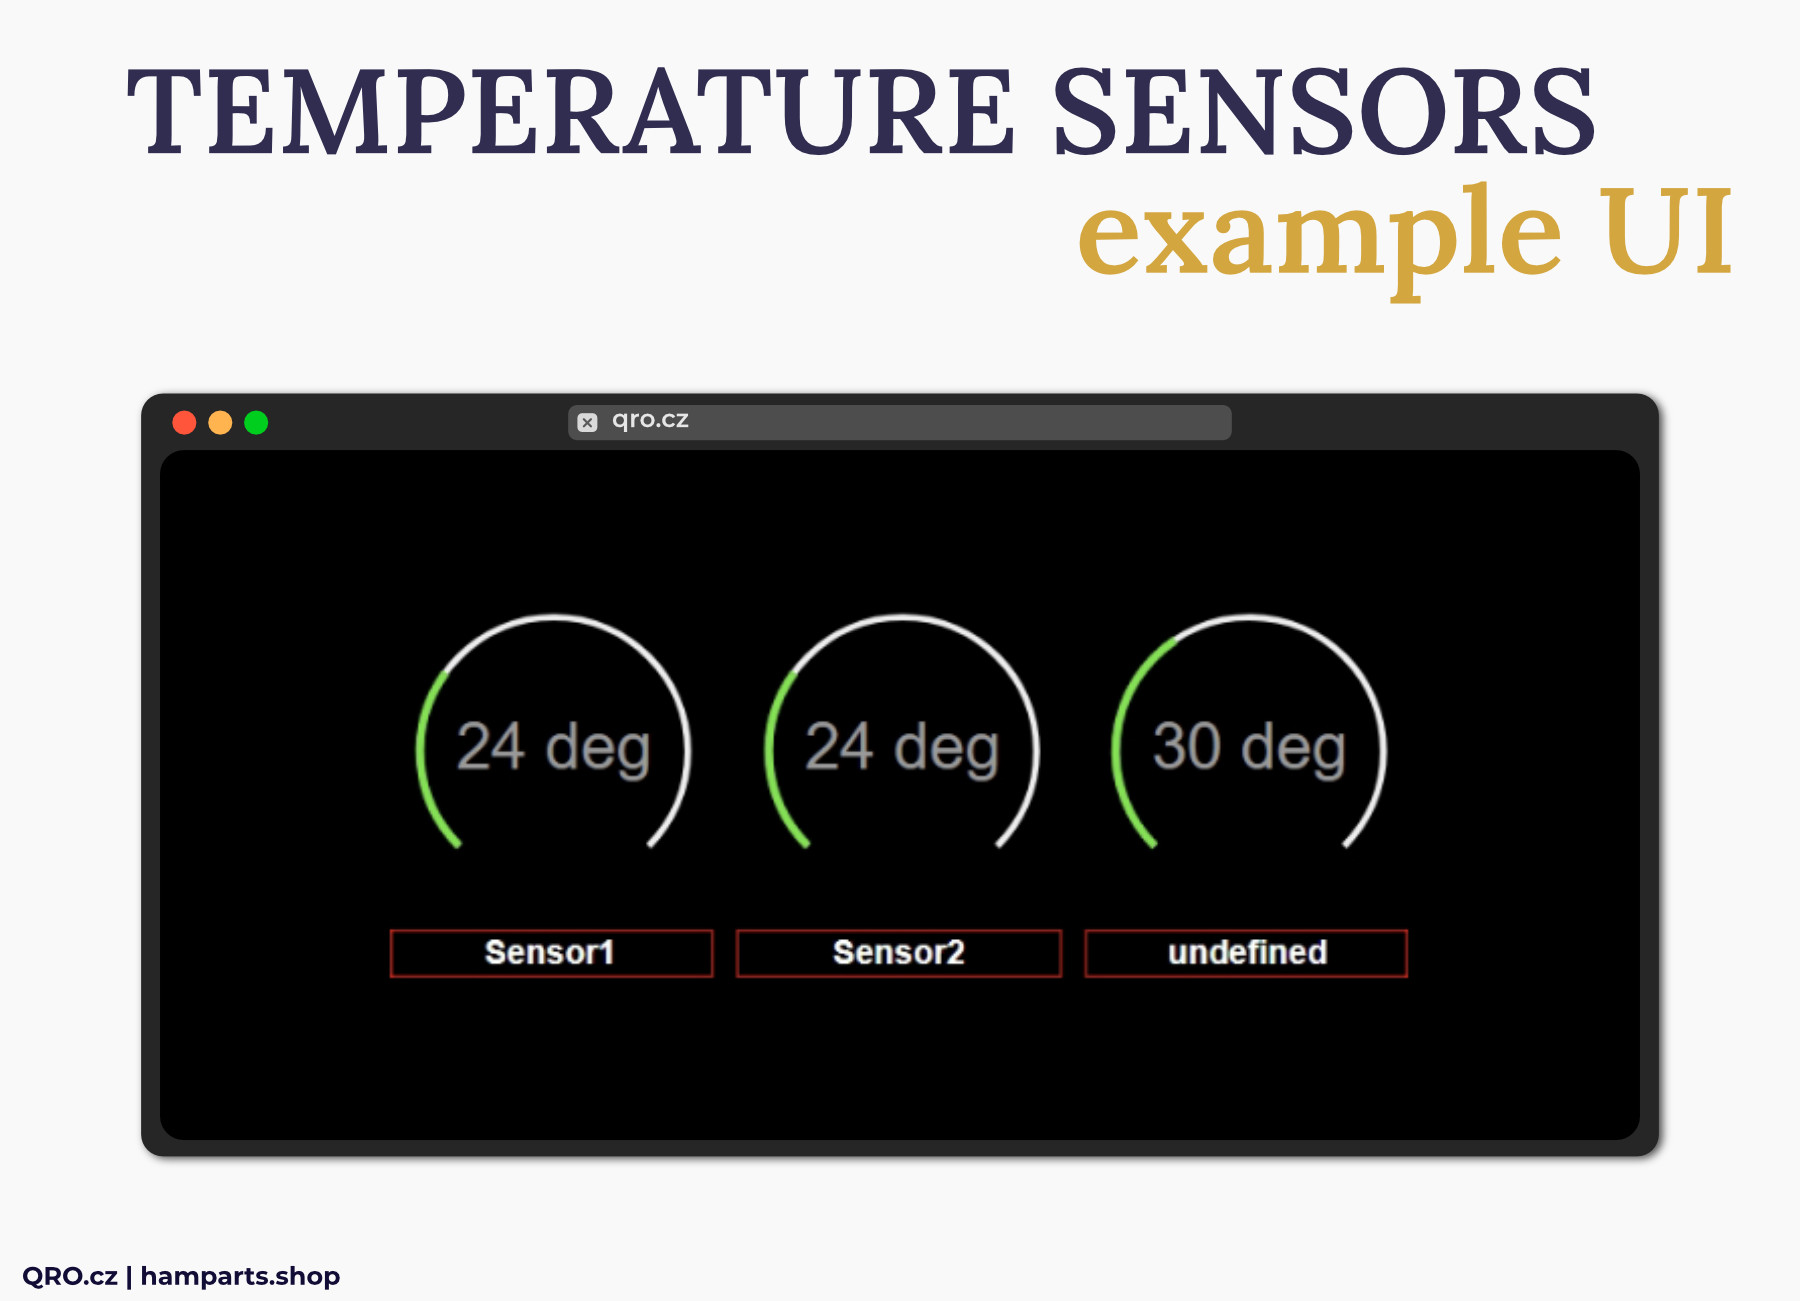 ui example remotius 64 temperature sensor qro.cz hamparts.shop